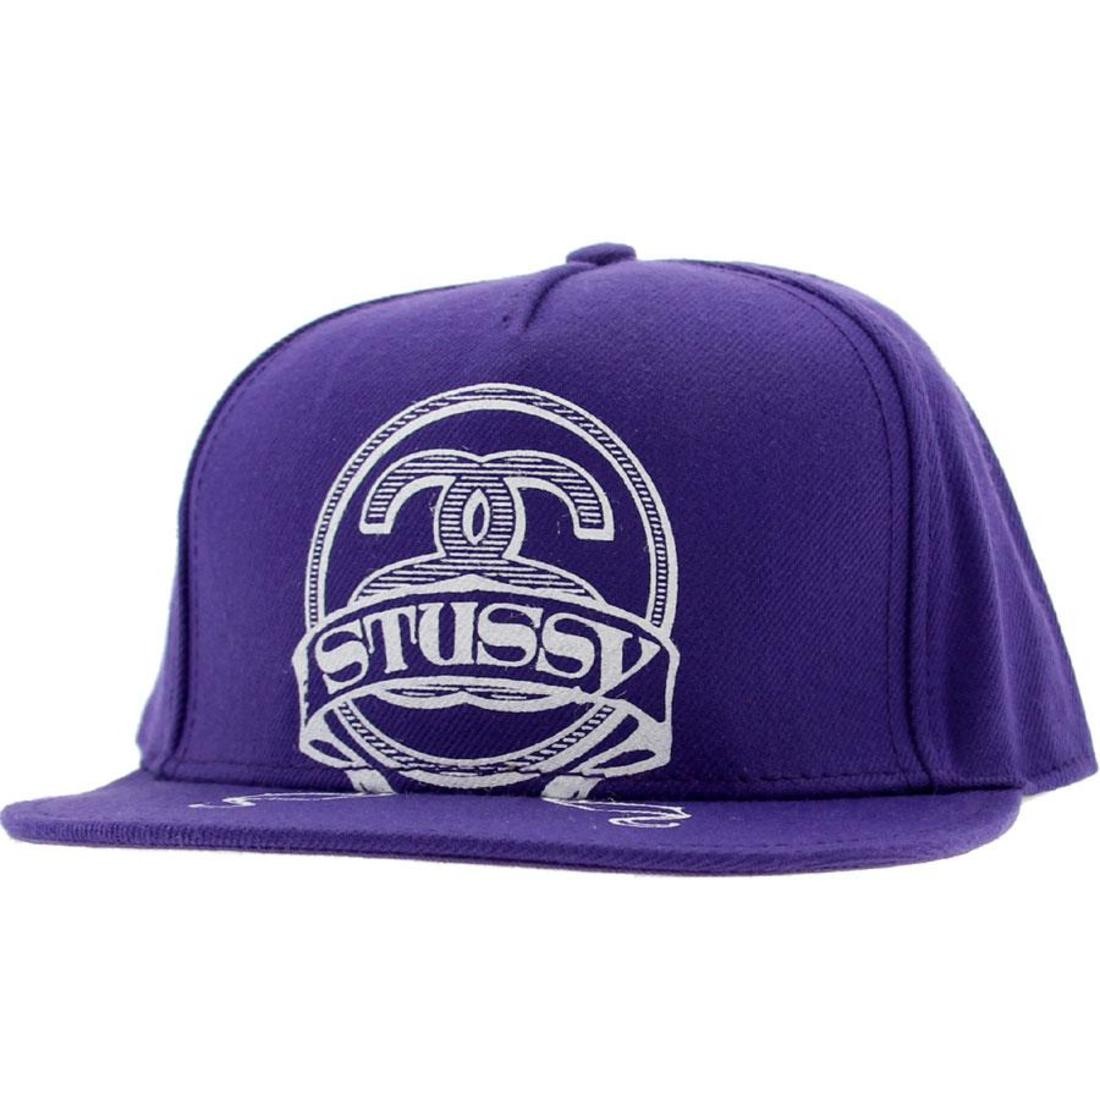 Stussy Stamp Snapback Cap (purple)